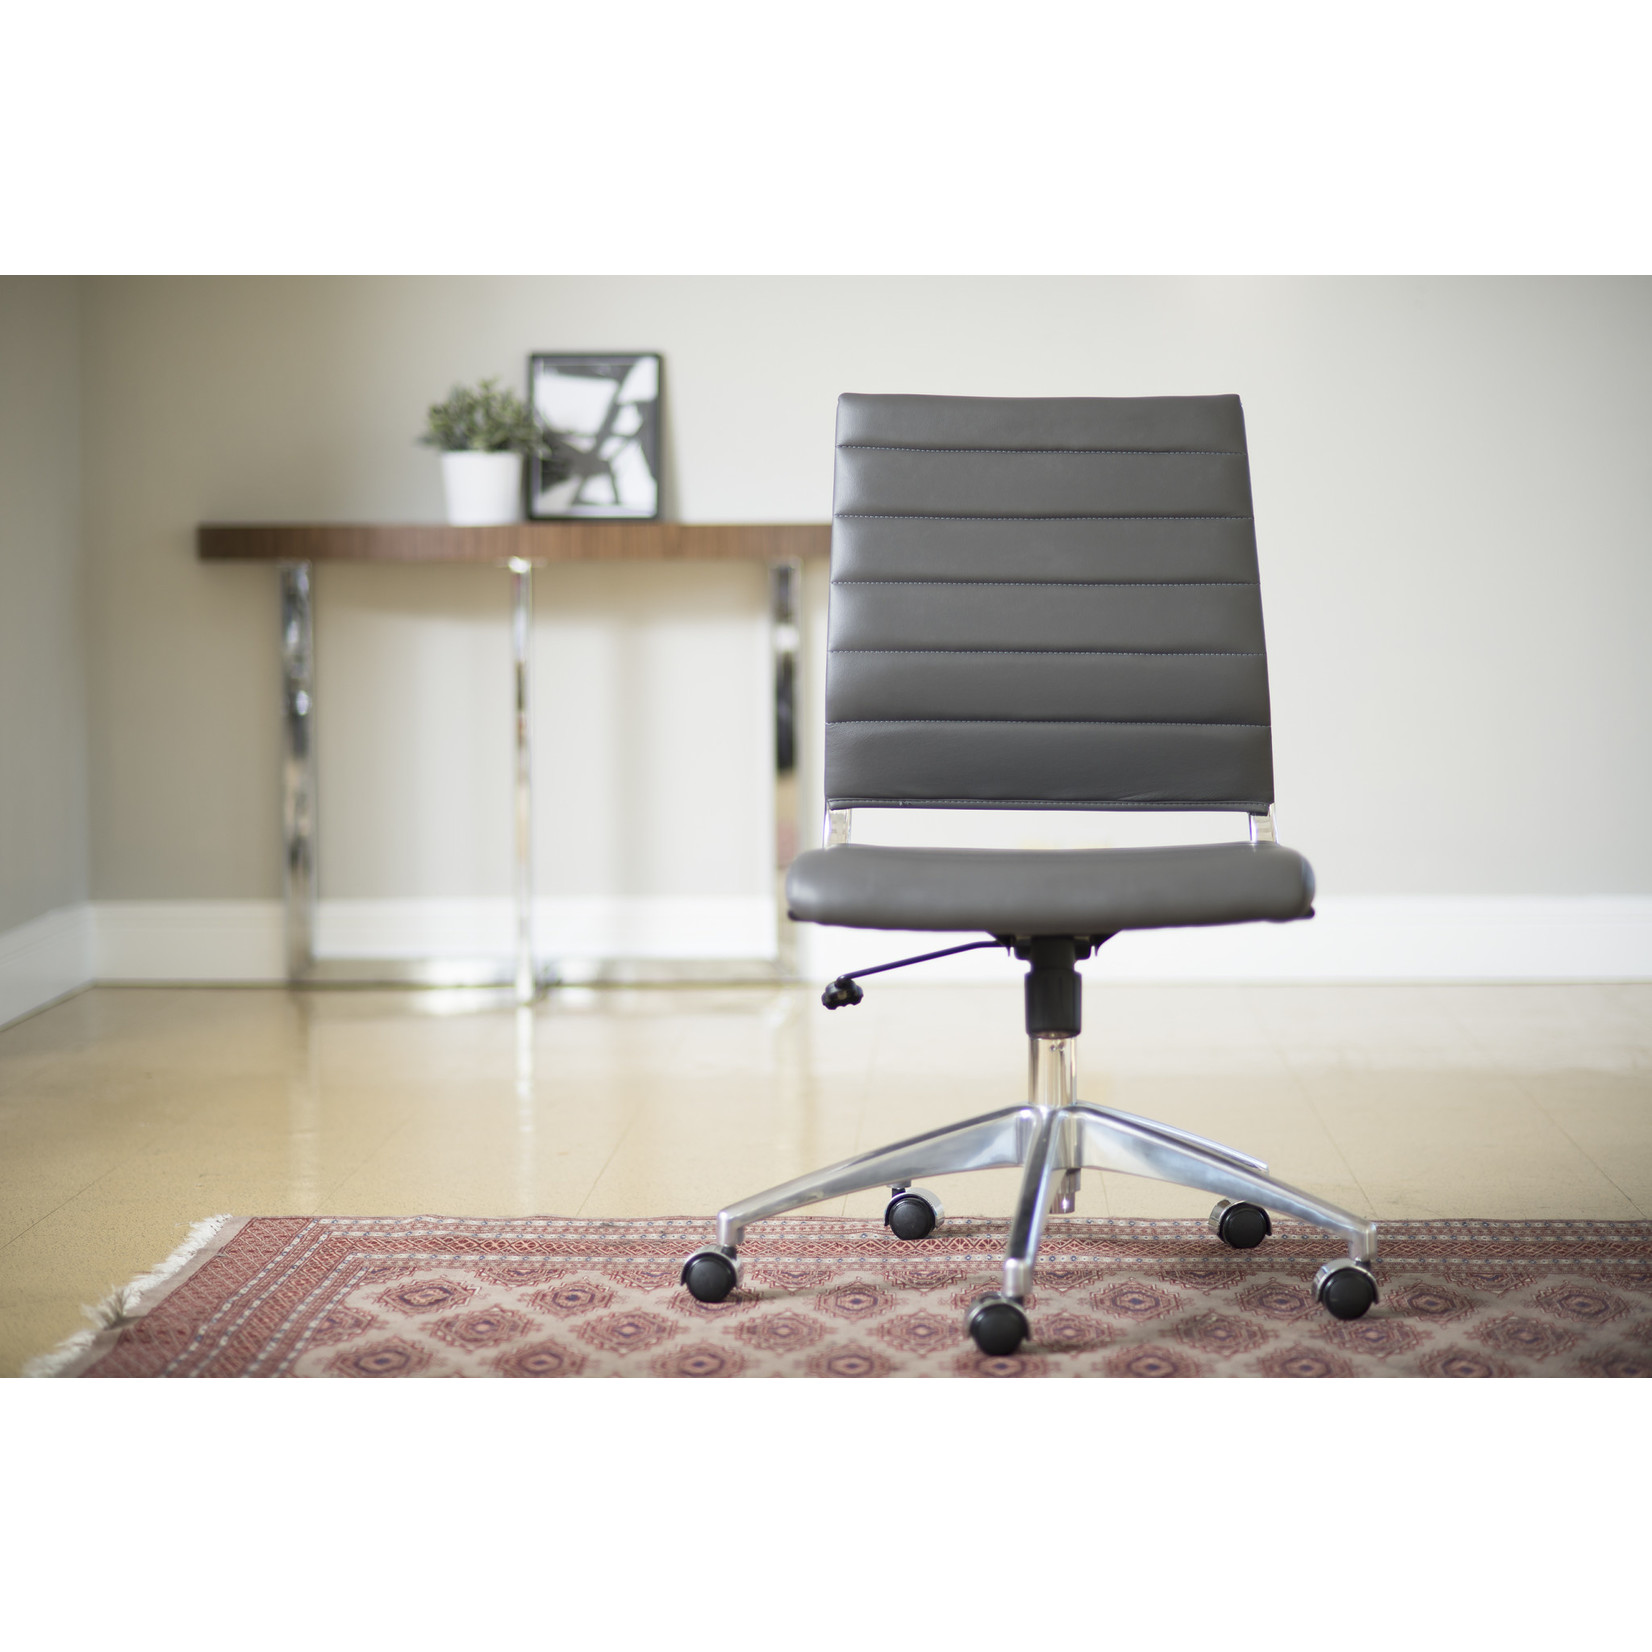 EuroStyle Axel LB Office chair Grey